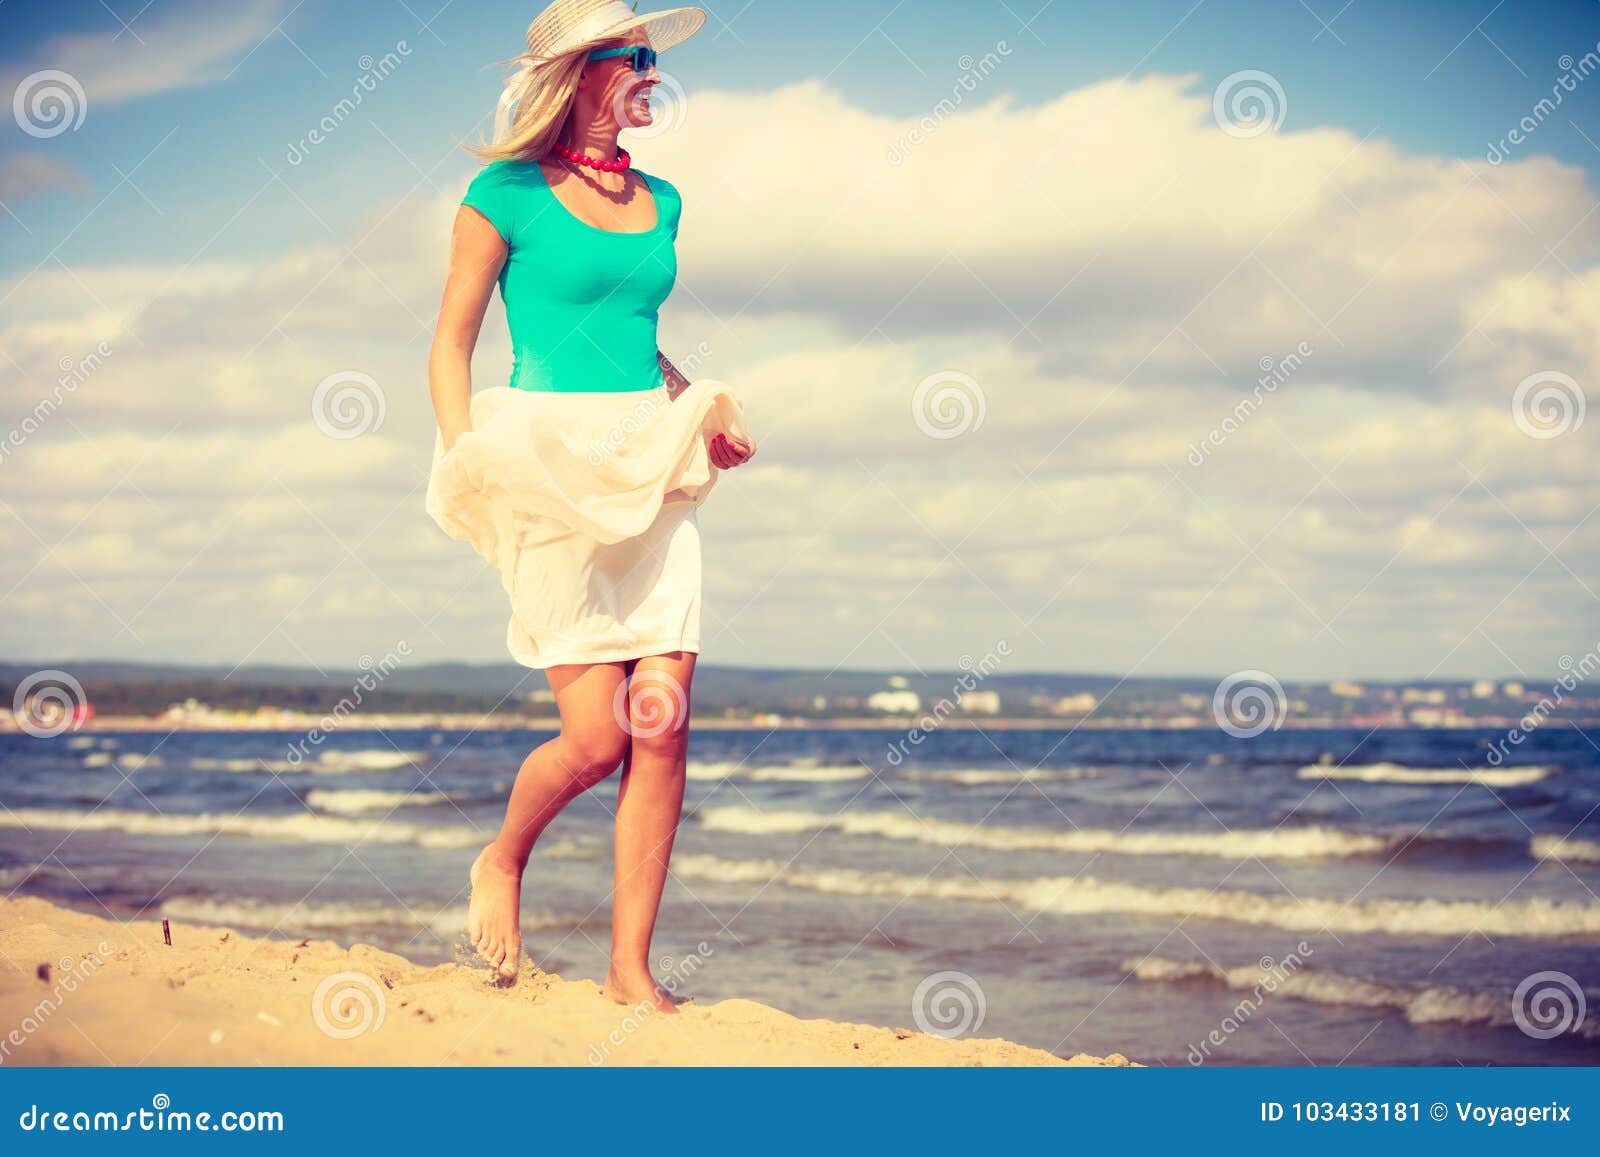 Blonde Woman Wearing Dress Walking On Beach Stock Image Image Of Woman Relaxation 103433181